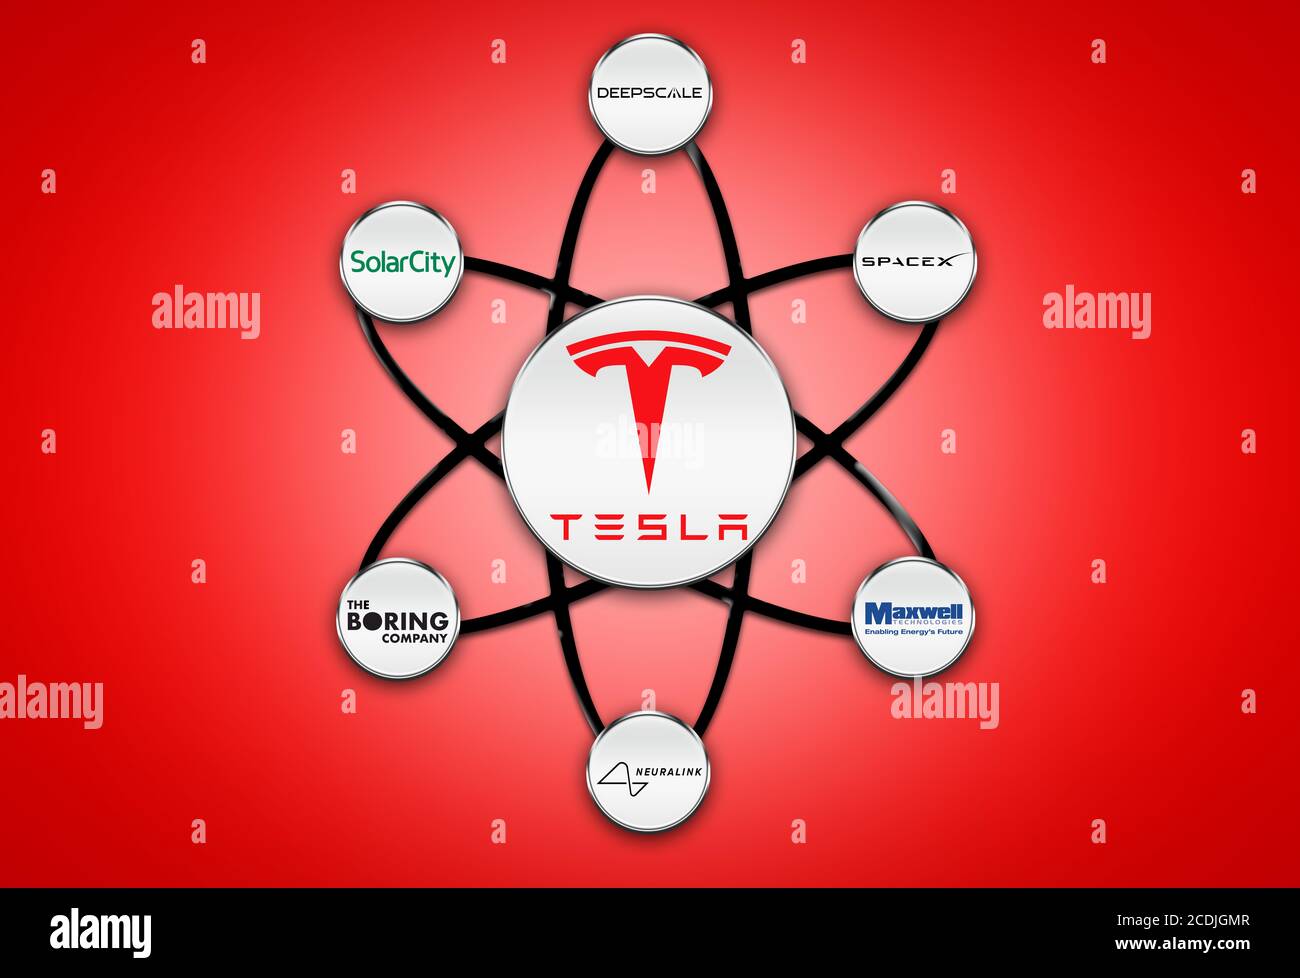 Tesla Elon Musk Stock Photo